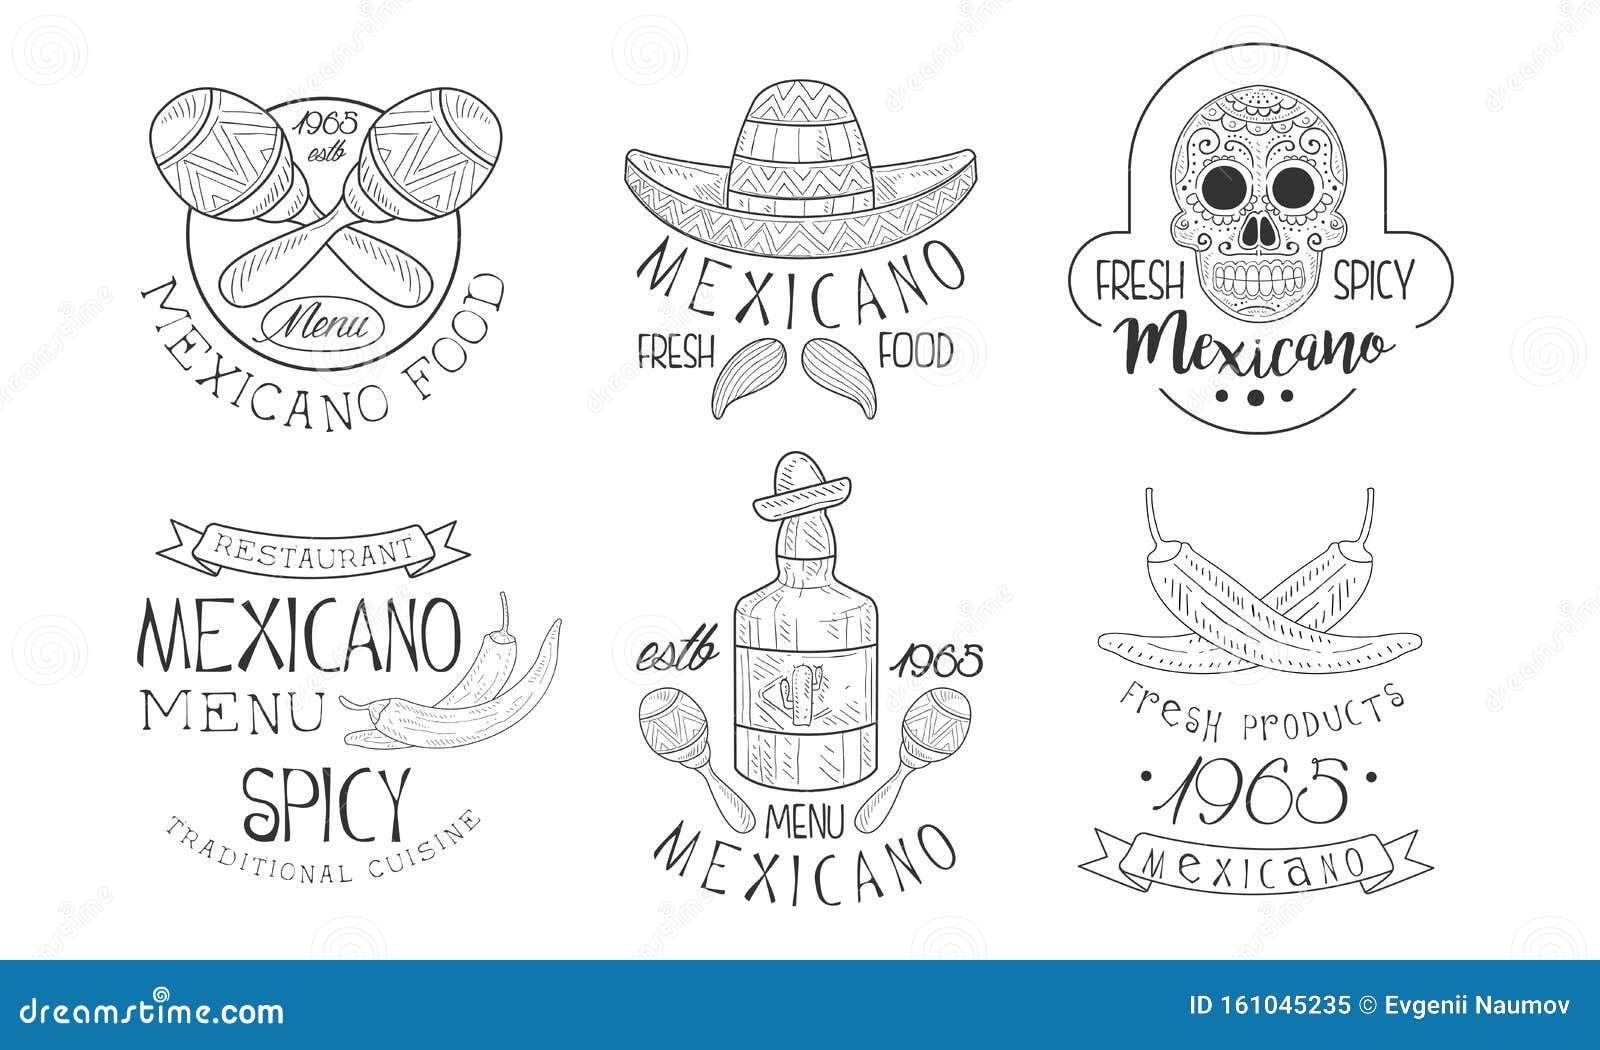 mexicano menu traditional spicy cuisine hand drawn retro labels set, fresh mexicano food monochrome badges 